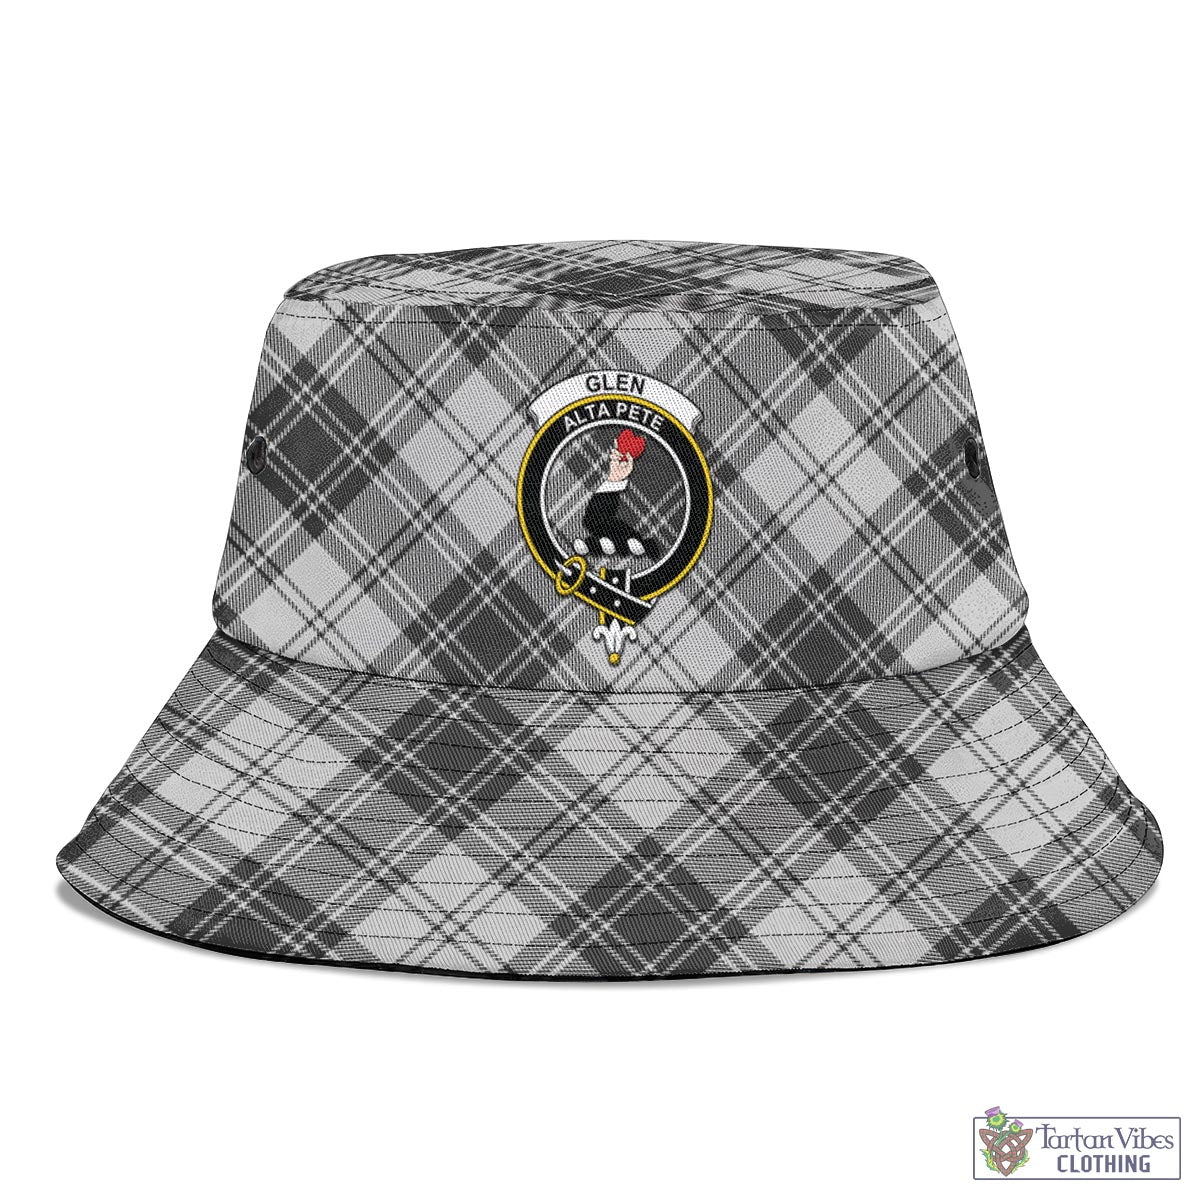 Tartan Vibes Clothing Glen Tartan Bucket Hat with Family Crest